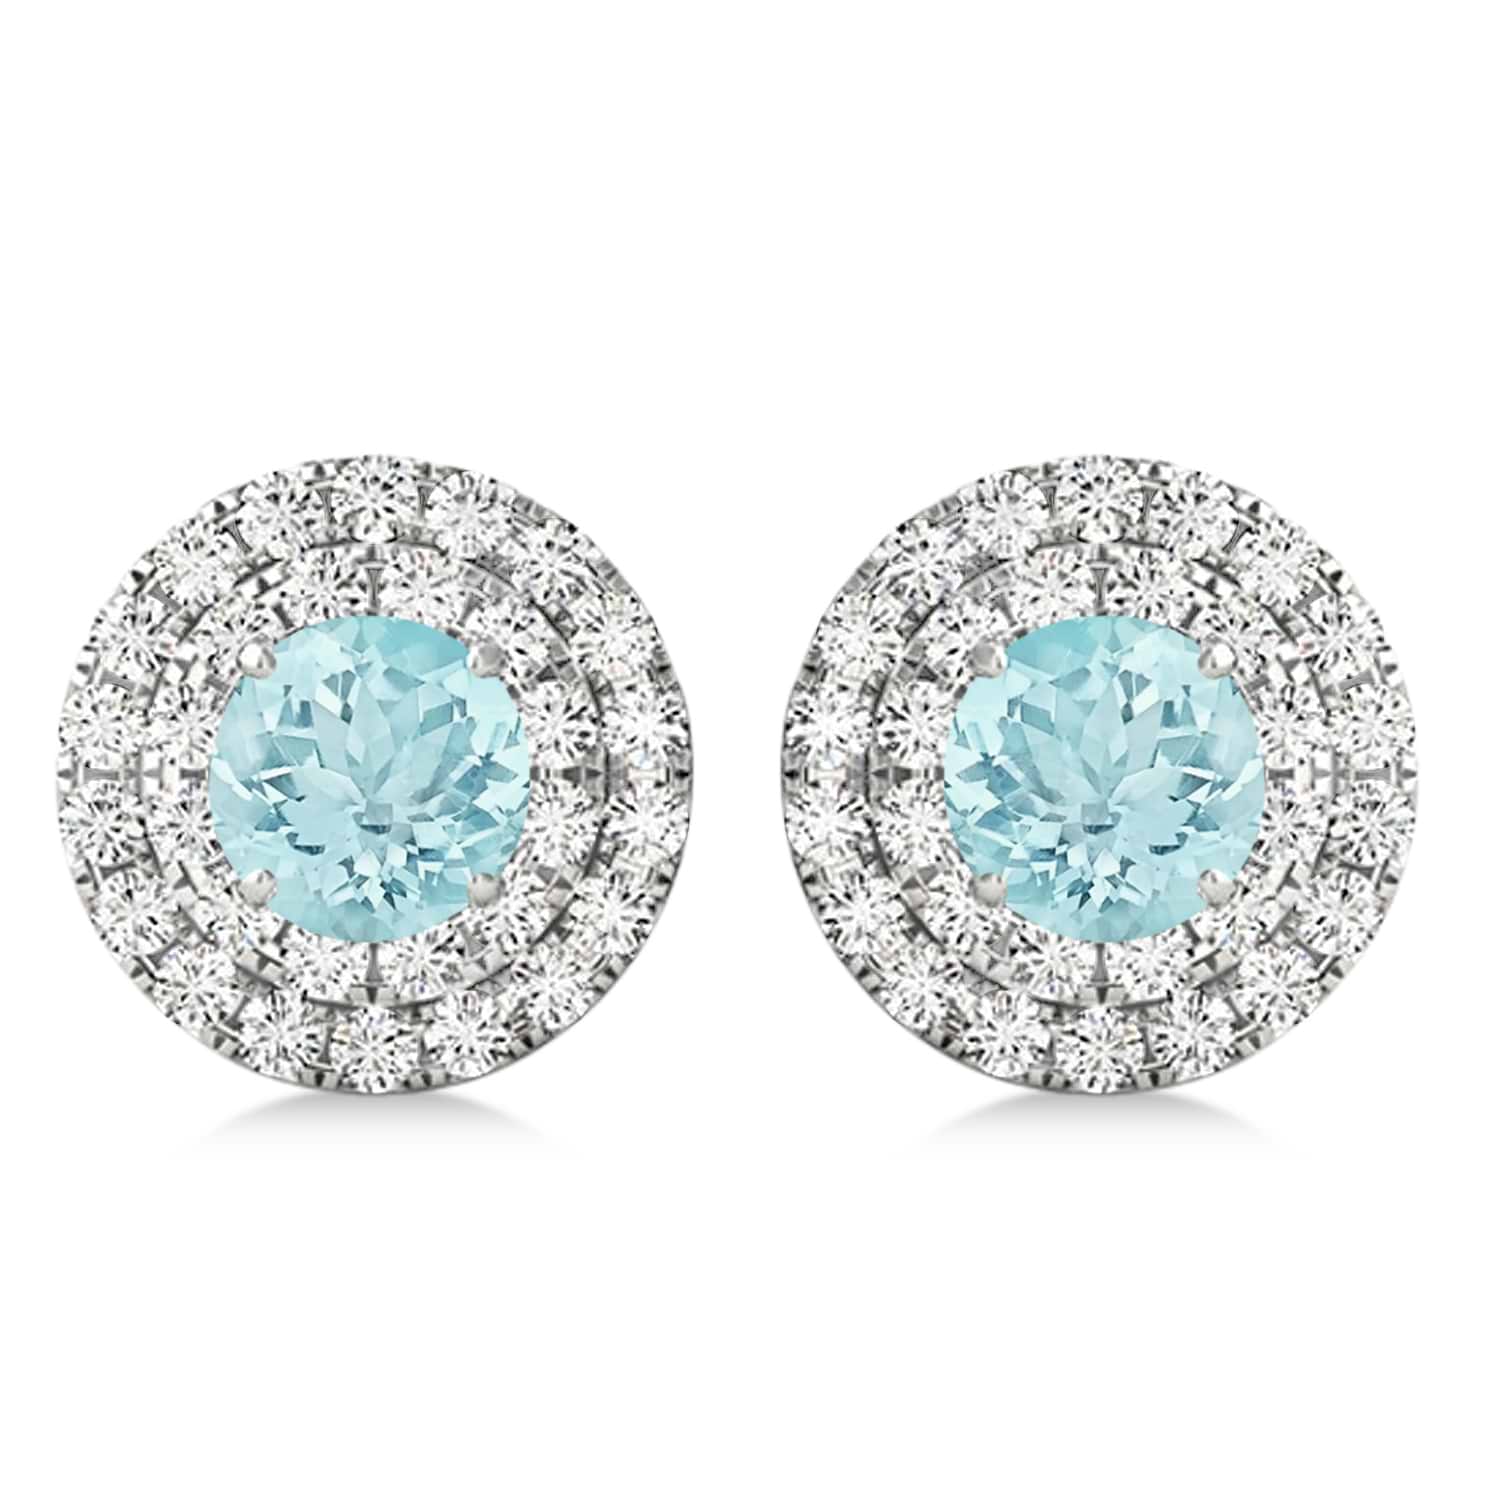 Round Double Halo Diamond & Aquamarine Earrings 14k White Gold 1.35ct